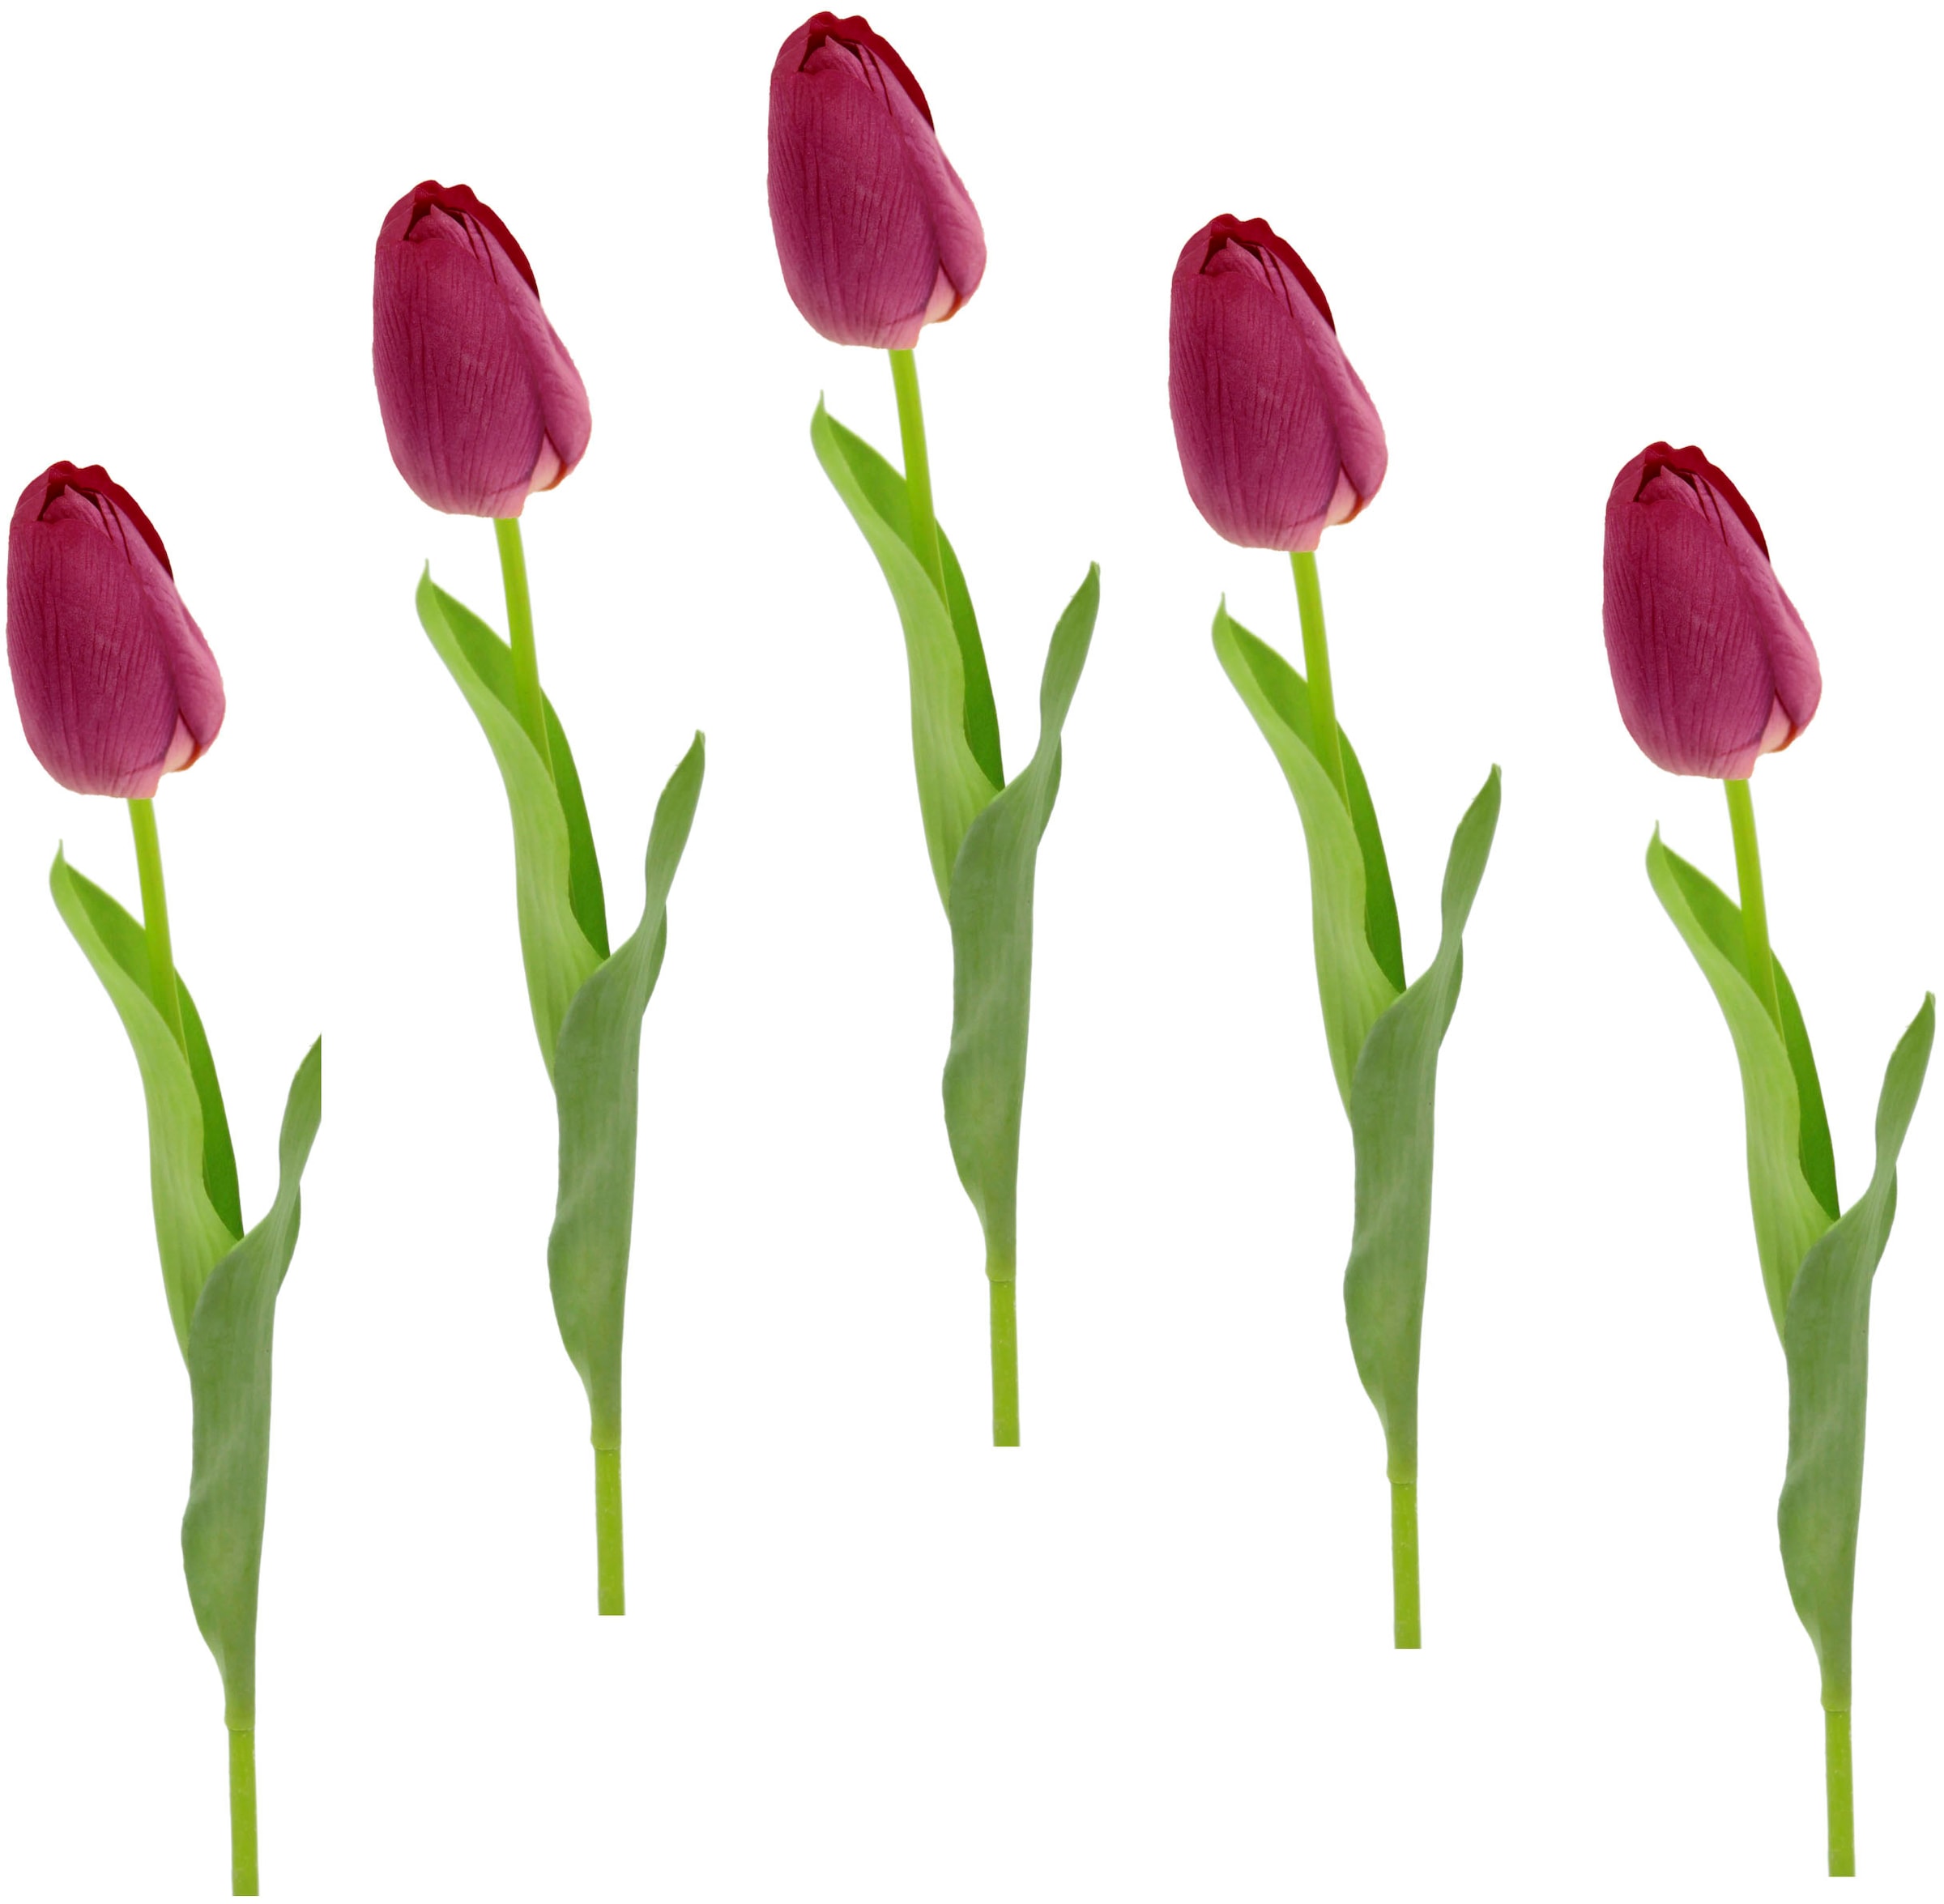 I.GE.A. Kunstblume »Real Touch Tulpen«, 5er Stielblume Tulpenknospen, künstliche Set jetzt kaufen Kunstblumen